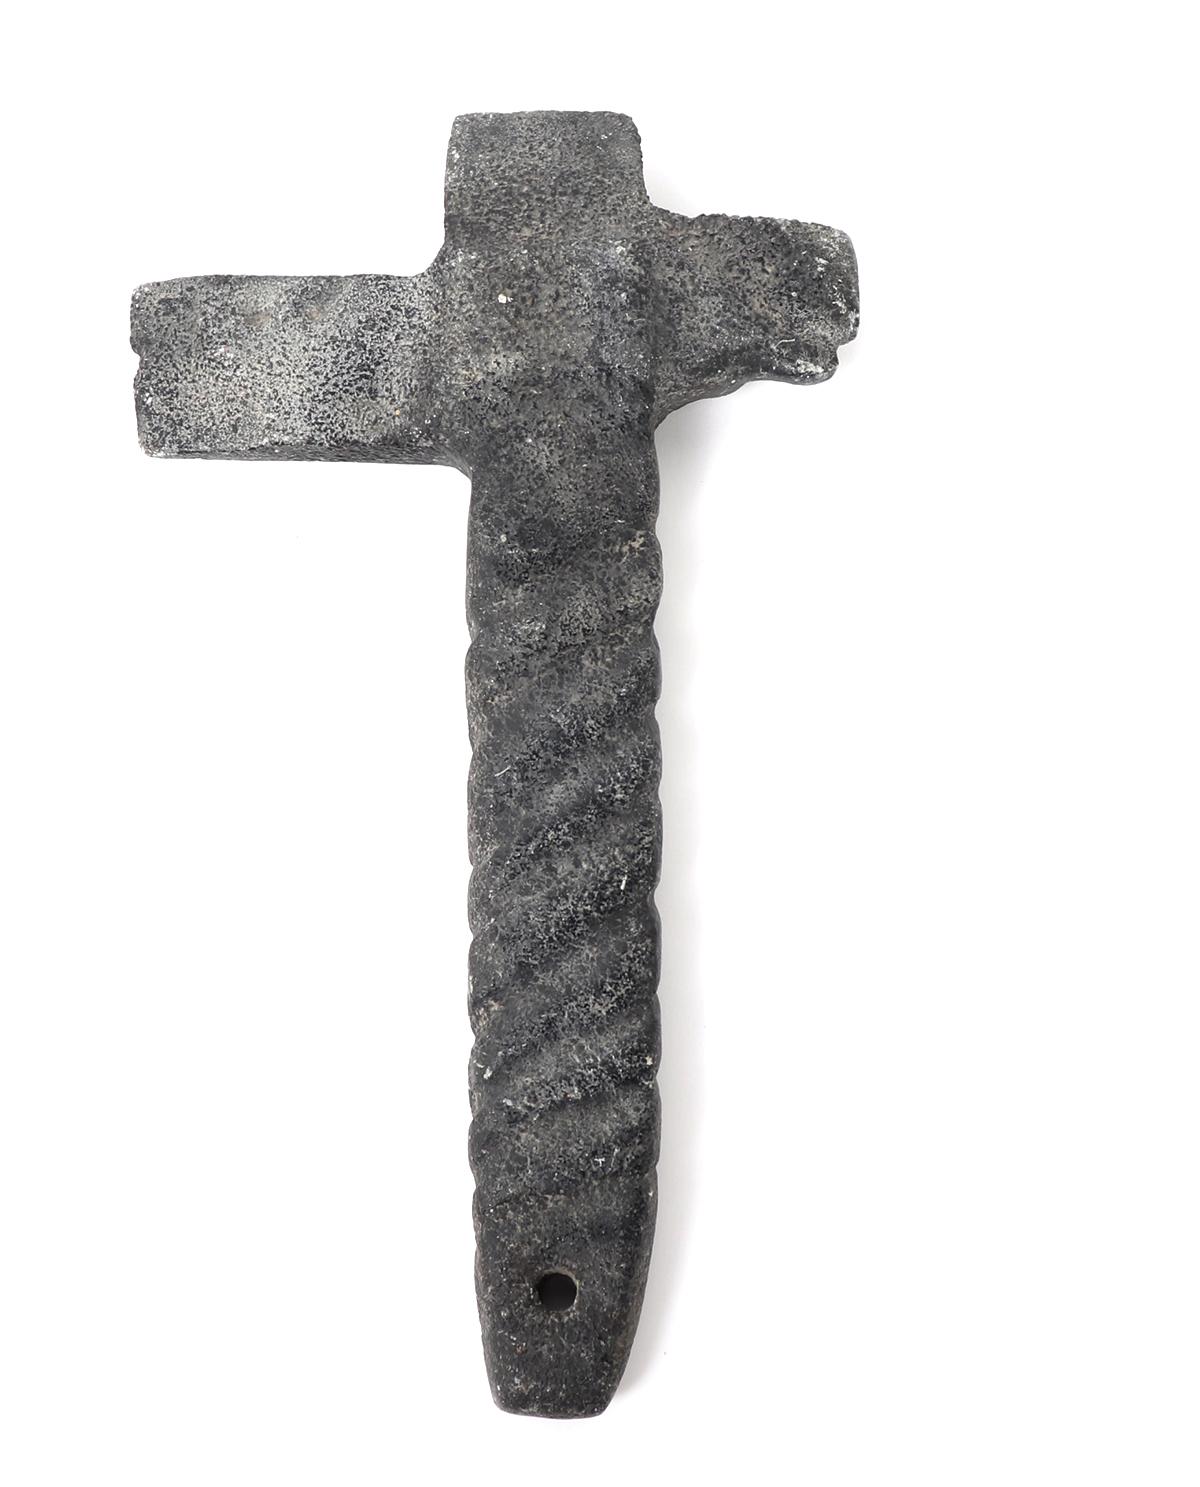 Tairona Stone Votive Axe, 800 - 1200 AD